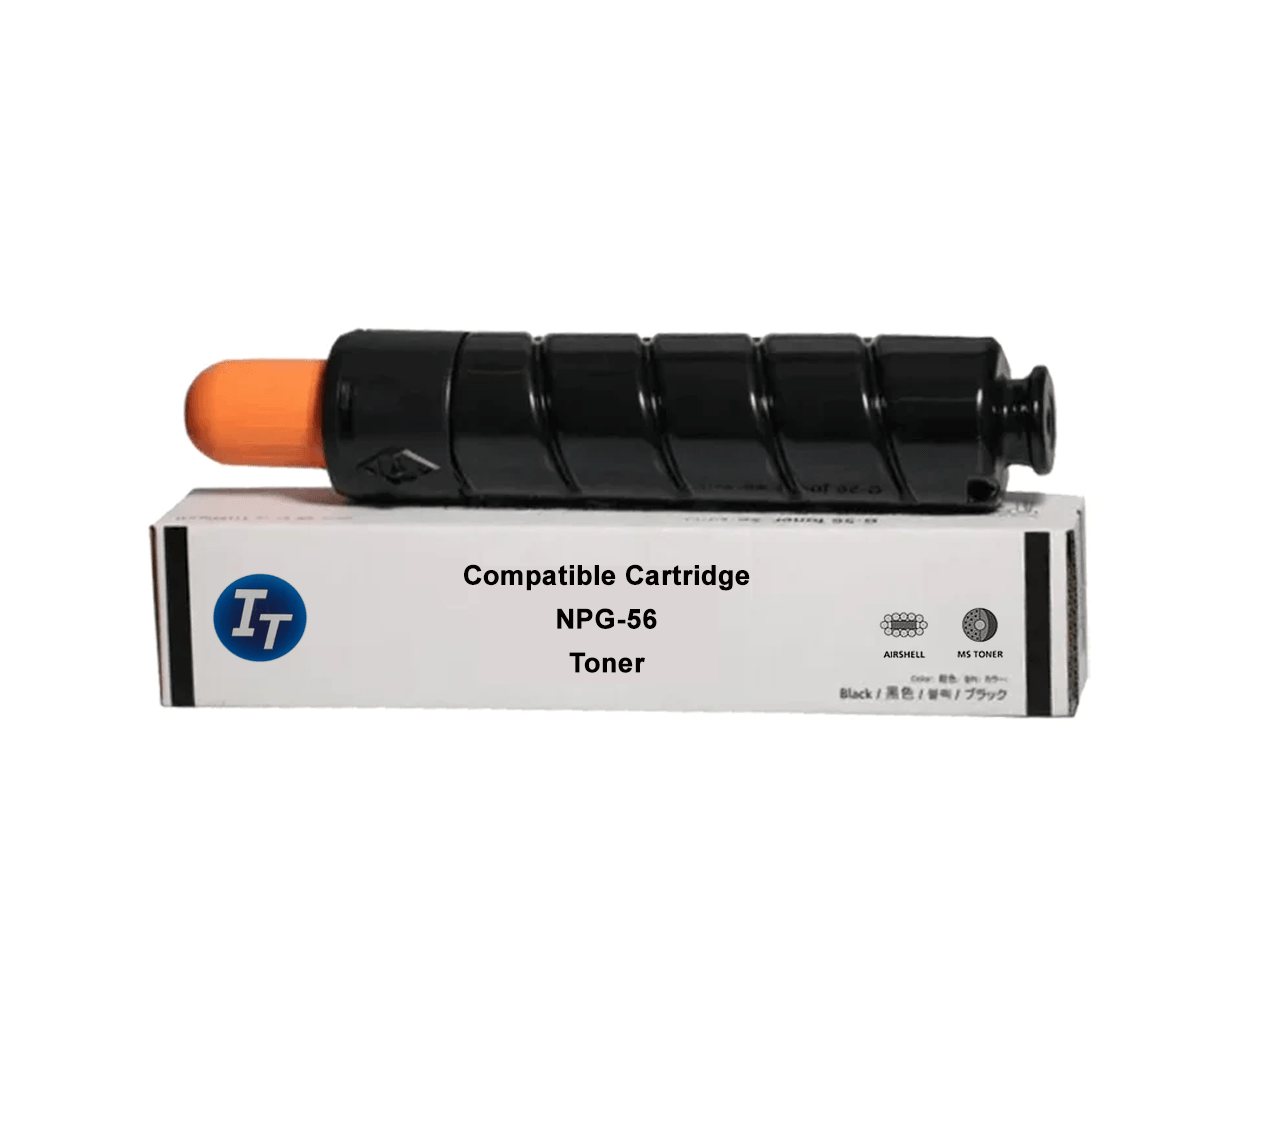 IT Toner Compatible Cartridge NPG-56 (4).png